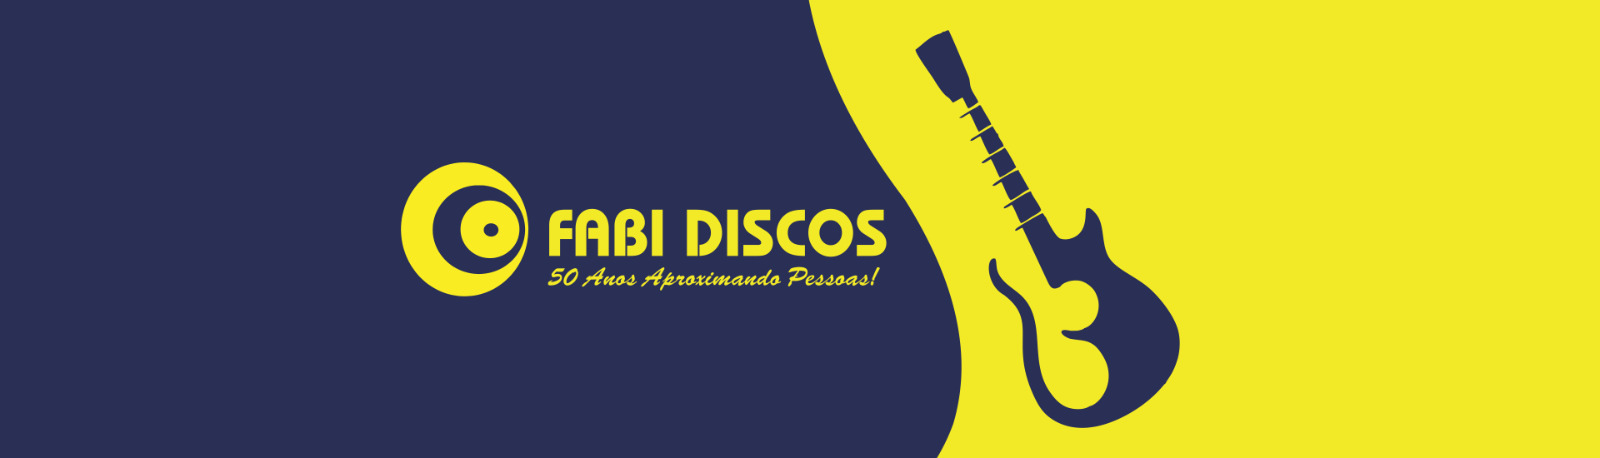 Banner Fabi Discos